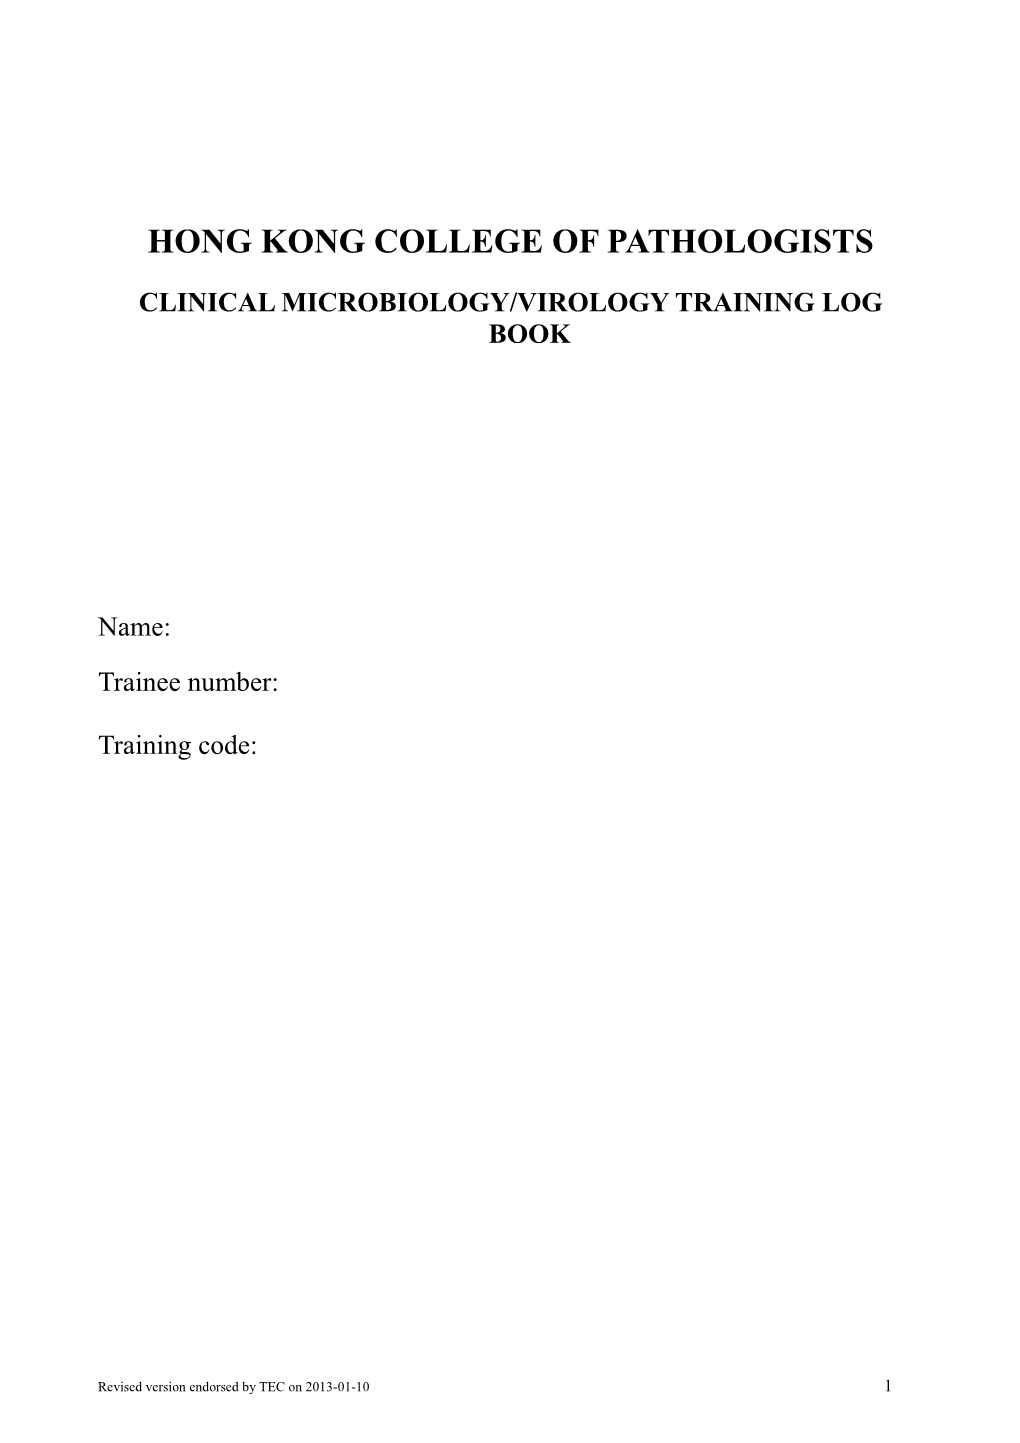 Clinical Microbiology/Virology Training Log Book